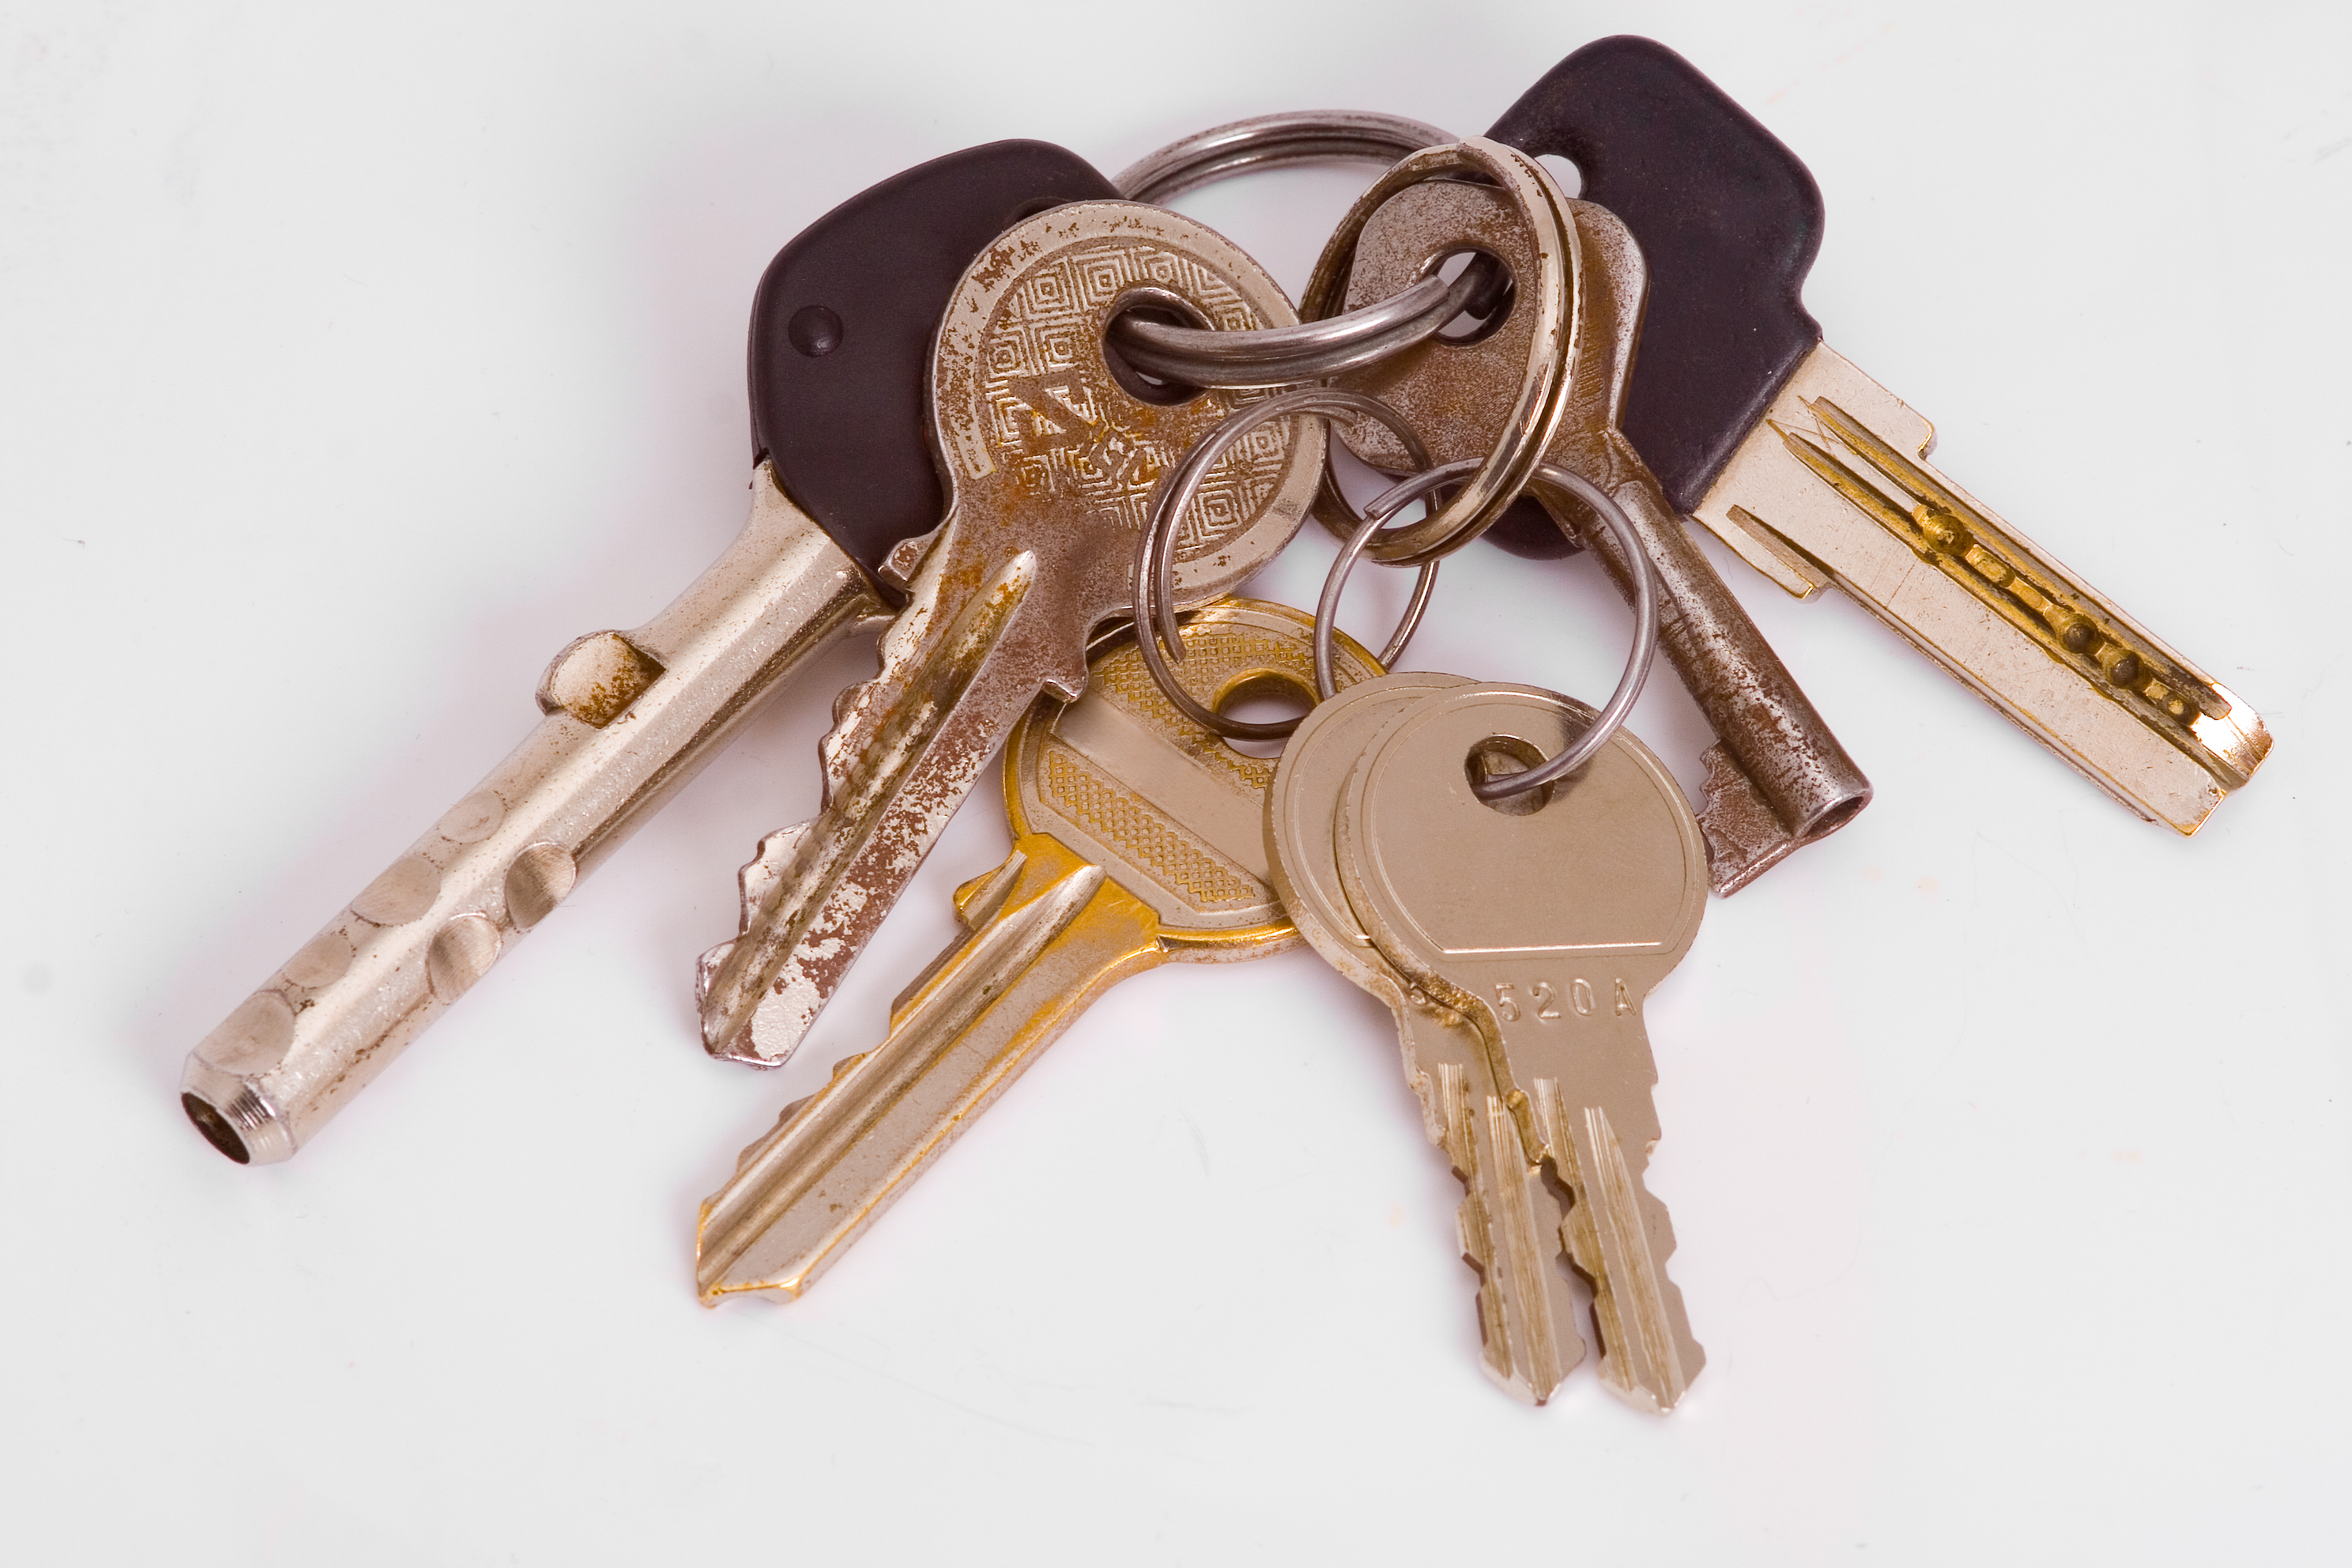 Keys picture. Связка ключей. Ключи от квартиры связка. Большая связка ключей. Современный ключ.